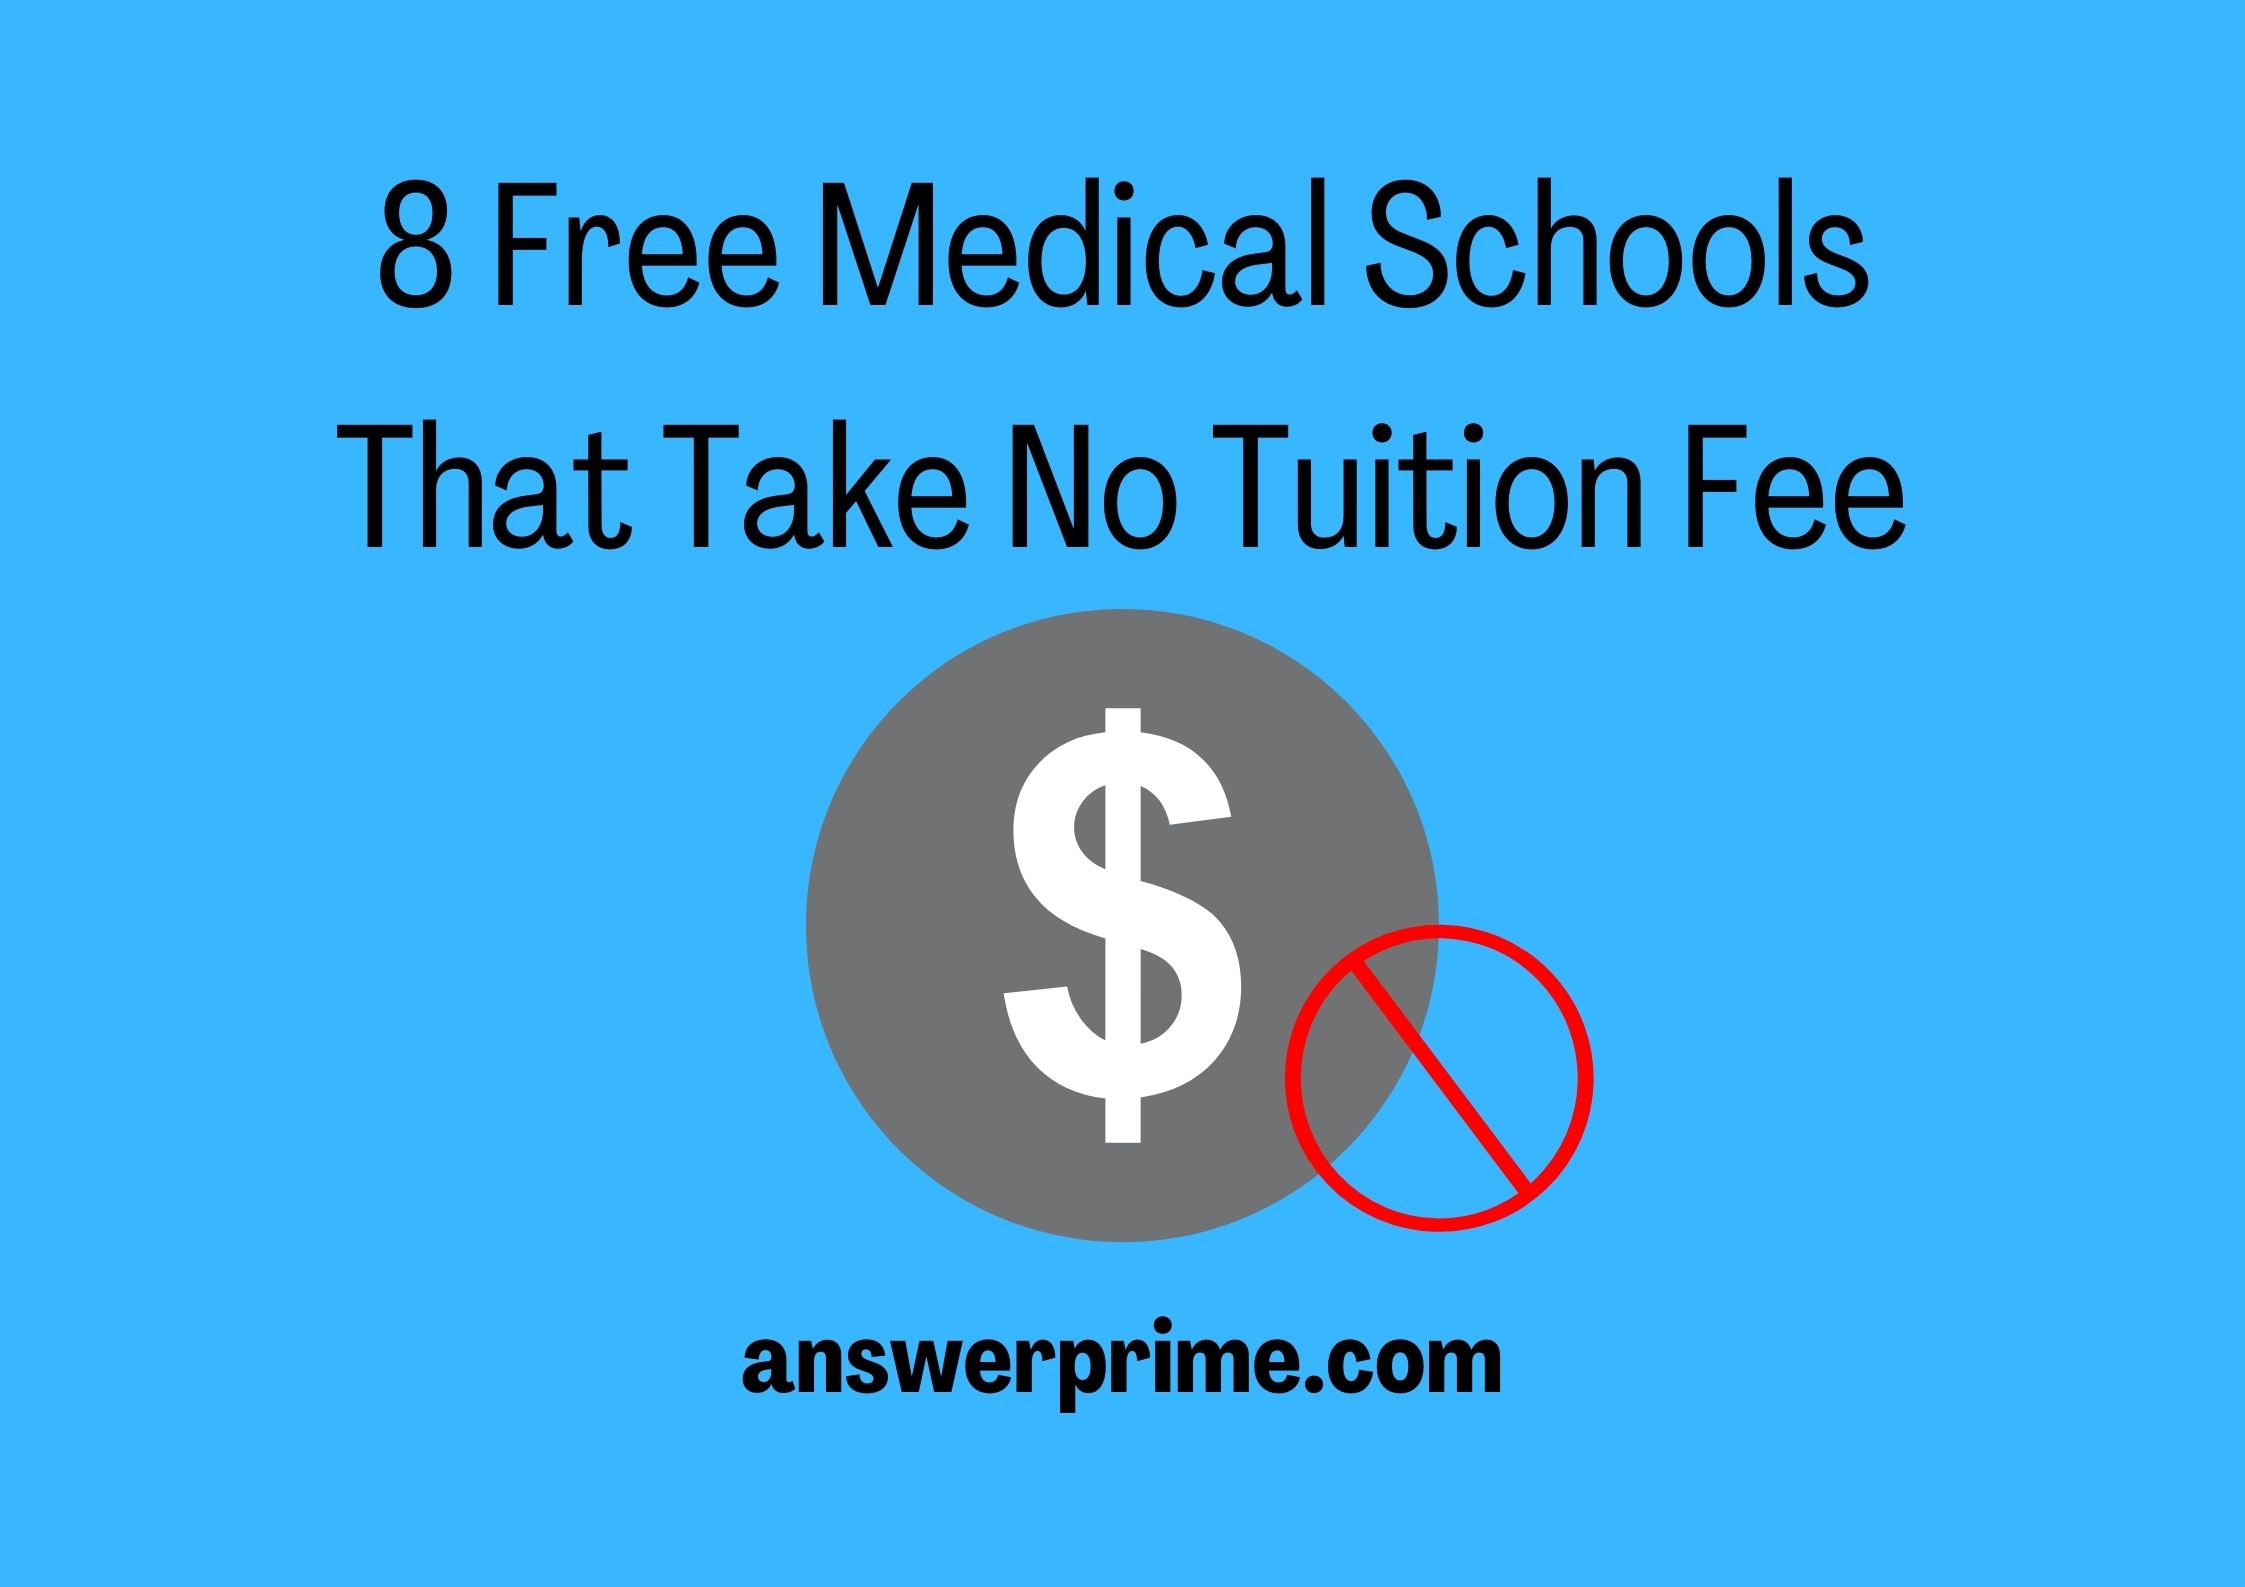 8 Free Medical Schools that take no Tuition Fee